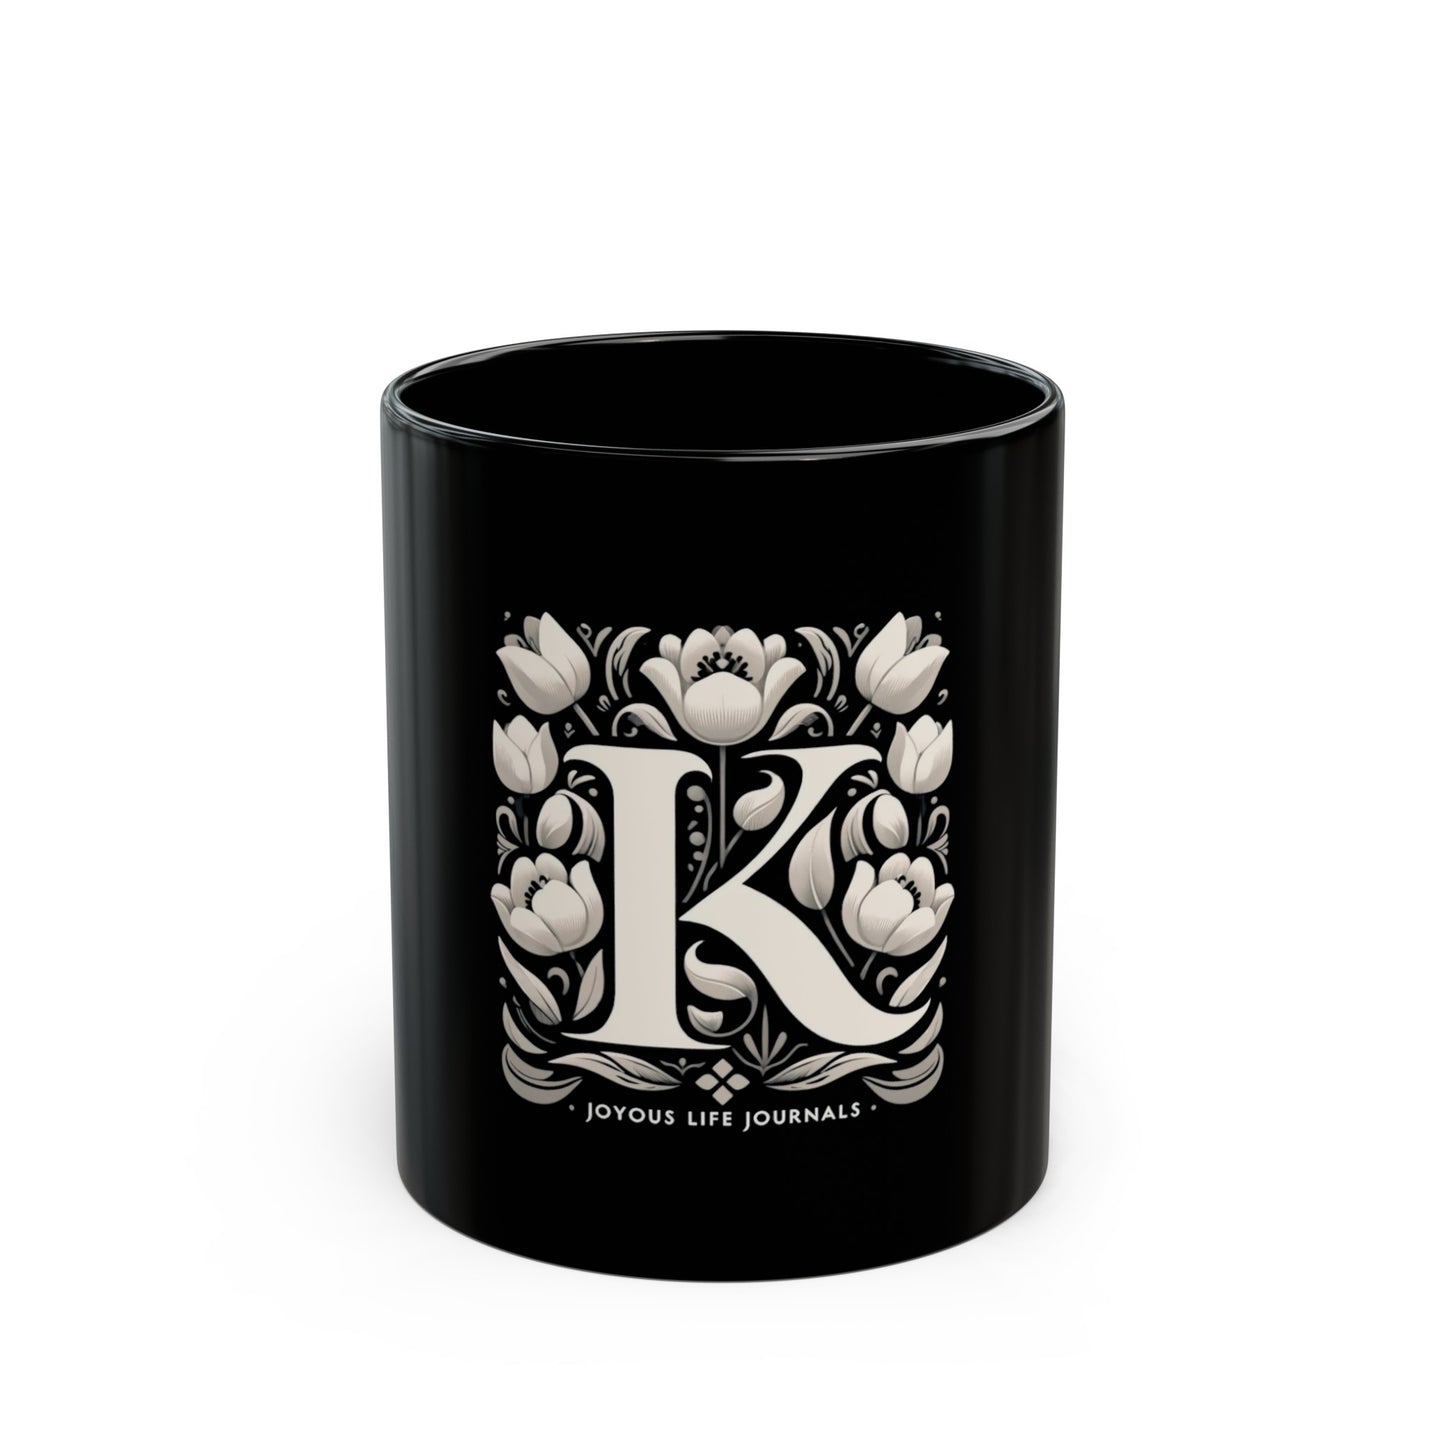 Kosmic Kaffeine: 11oz Black Ceramic Mug, Joyous Life Journals